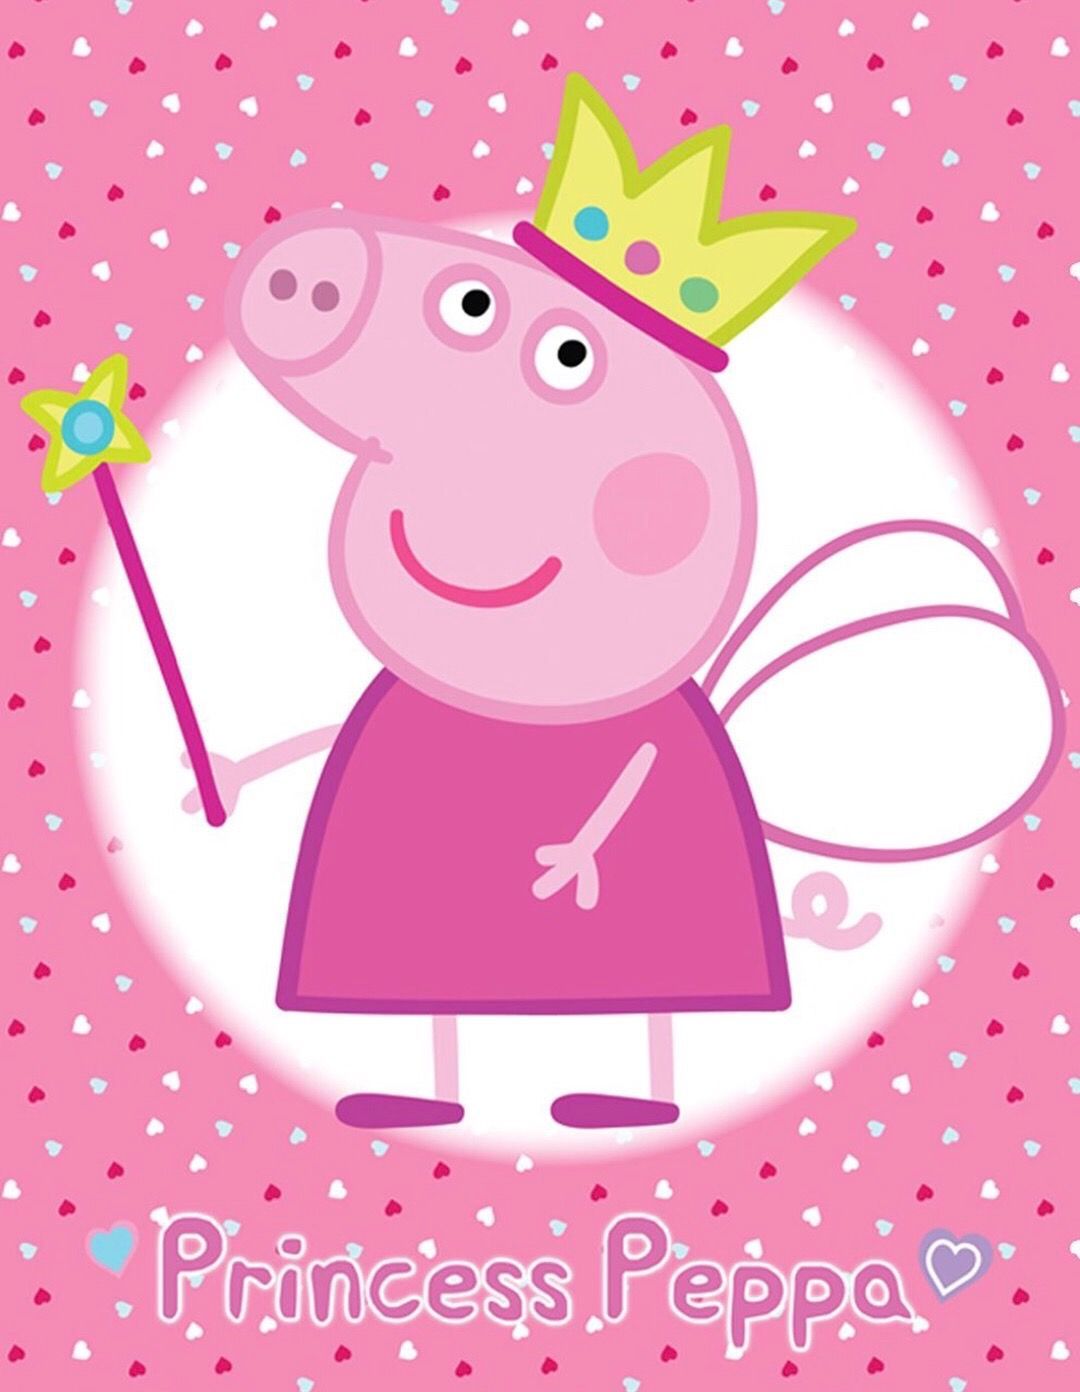 Peppa Pig. Peppa pig wallpaper, Pig wallpaper, Peppa pig background